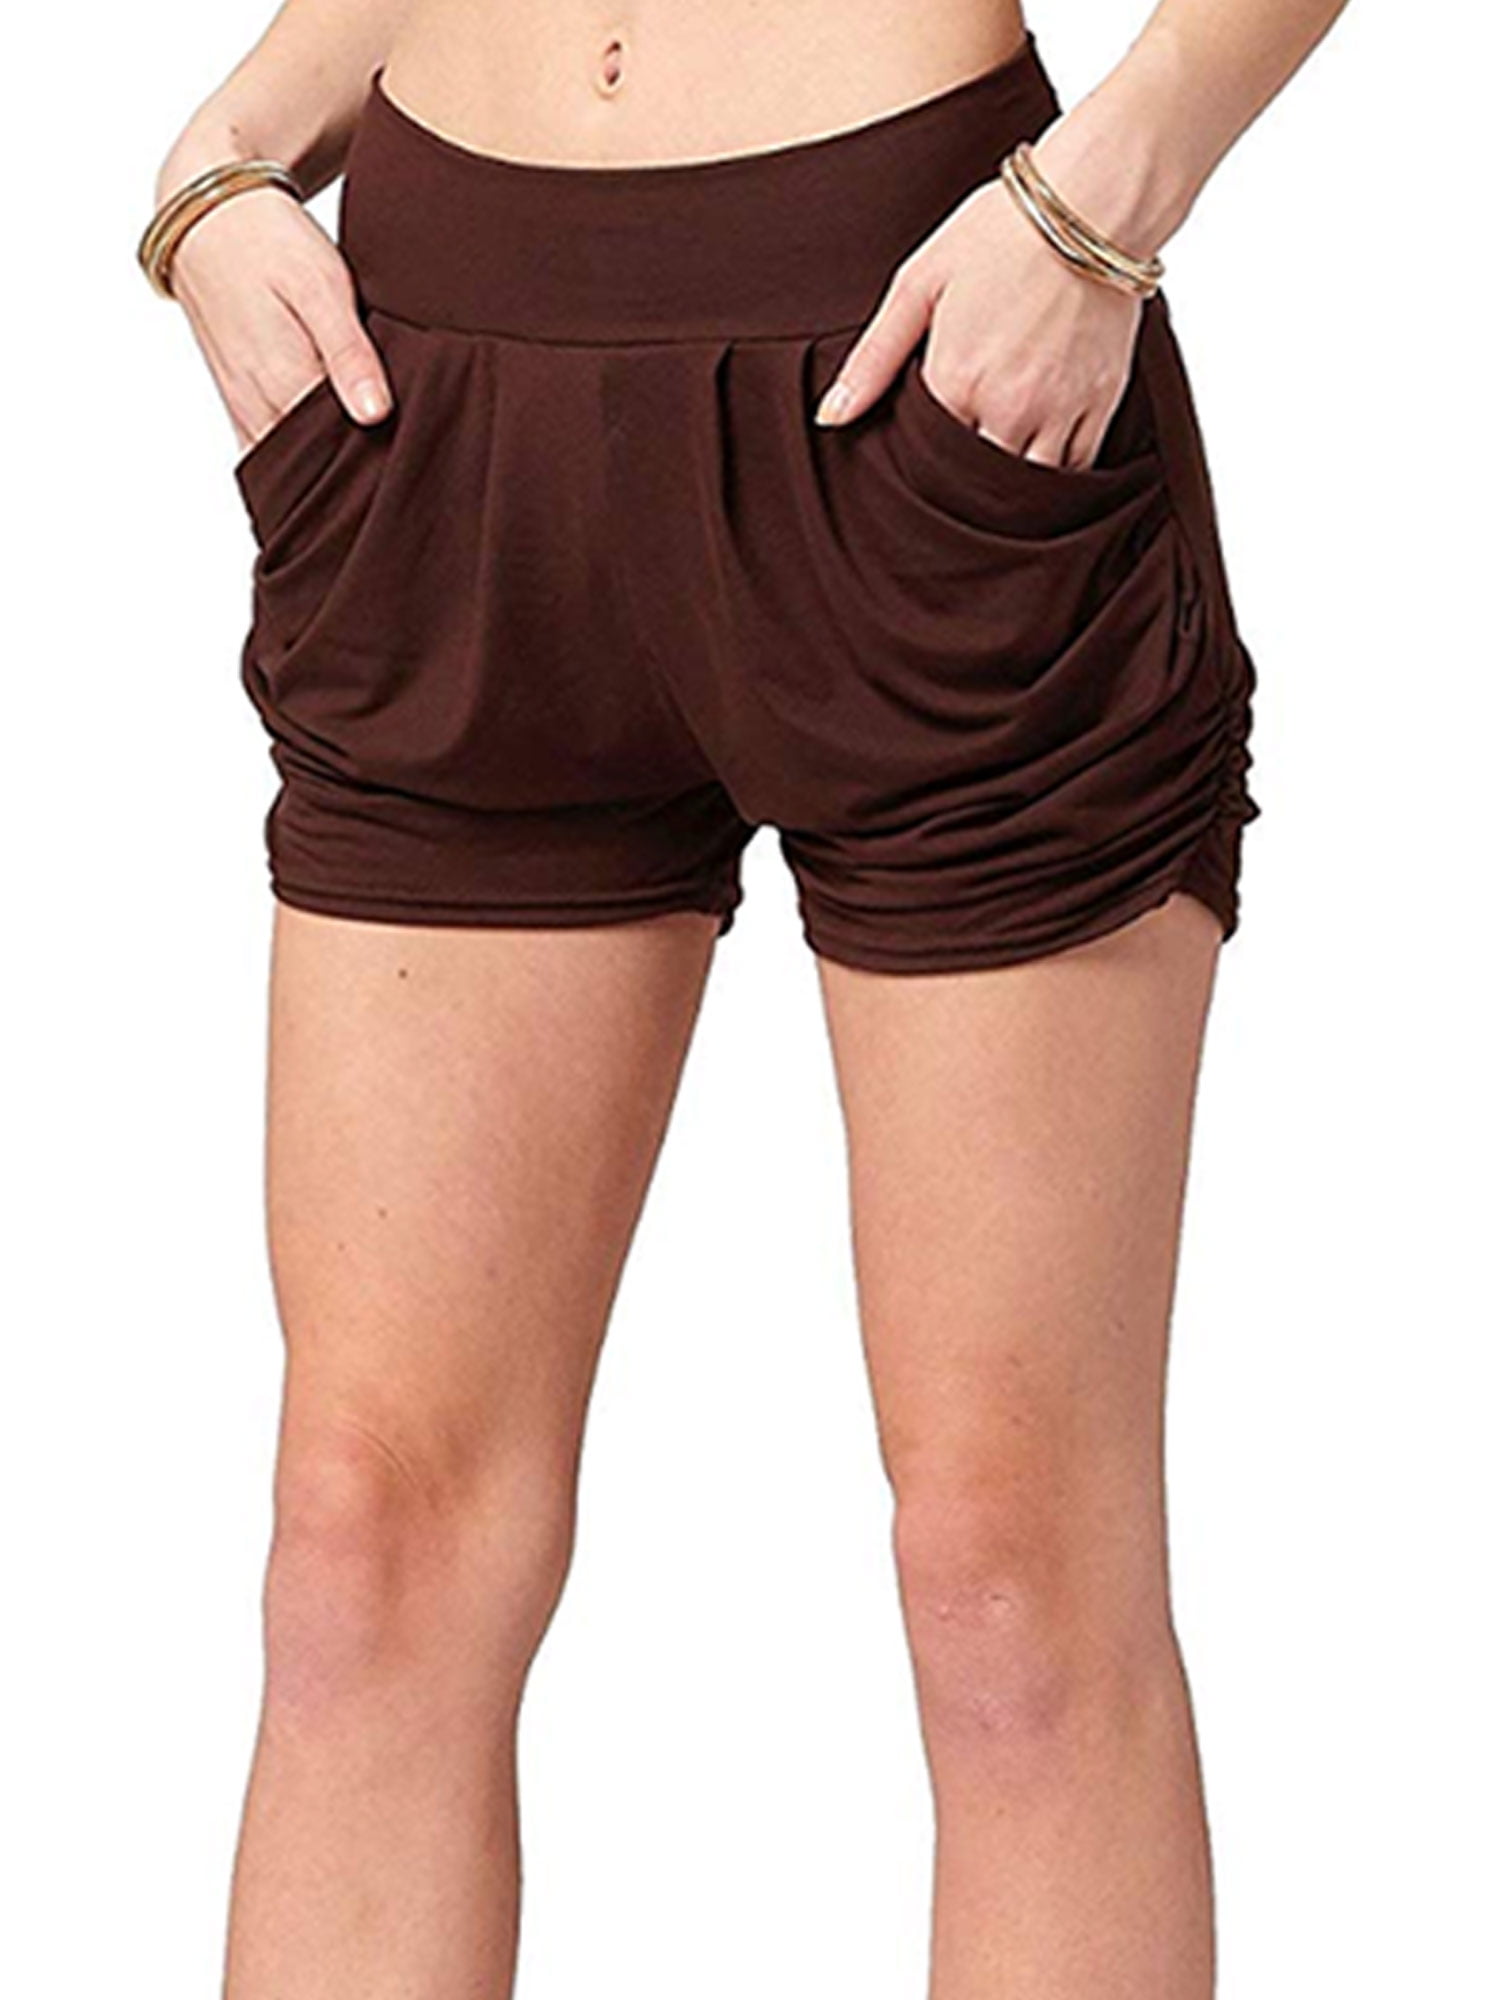 40 Trending Prints Conceited Premium Ultra Soft Harem Shorts Pockets 